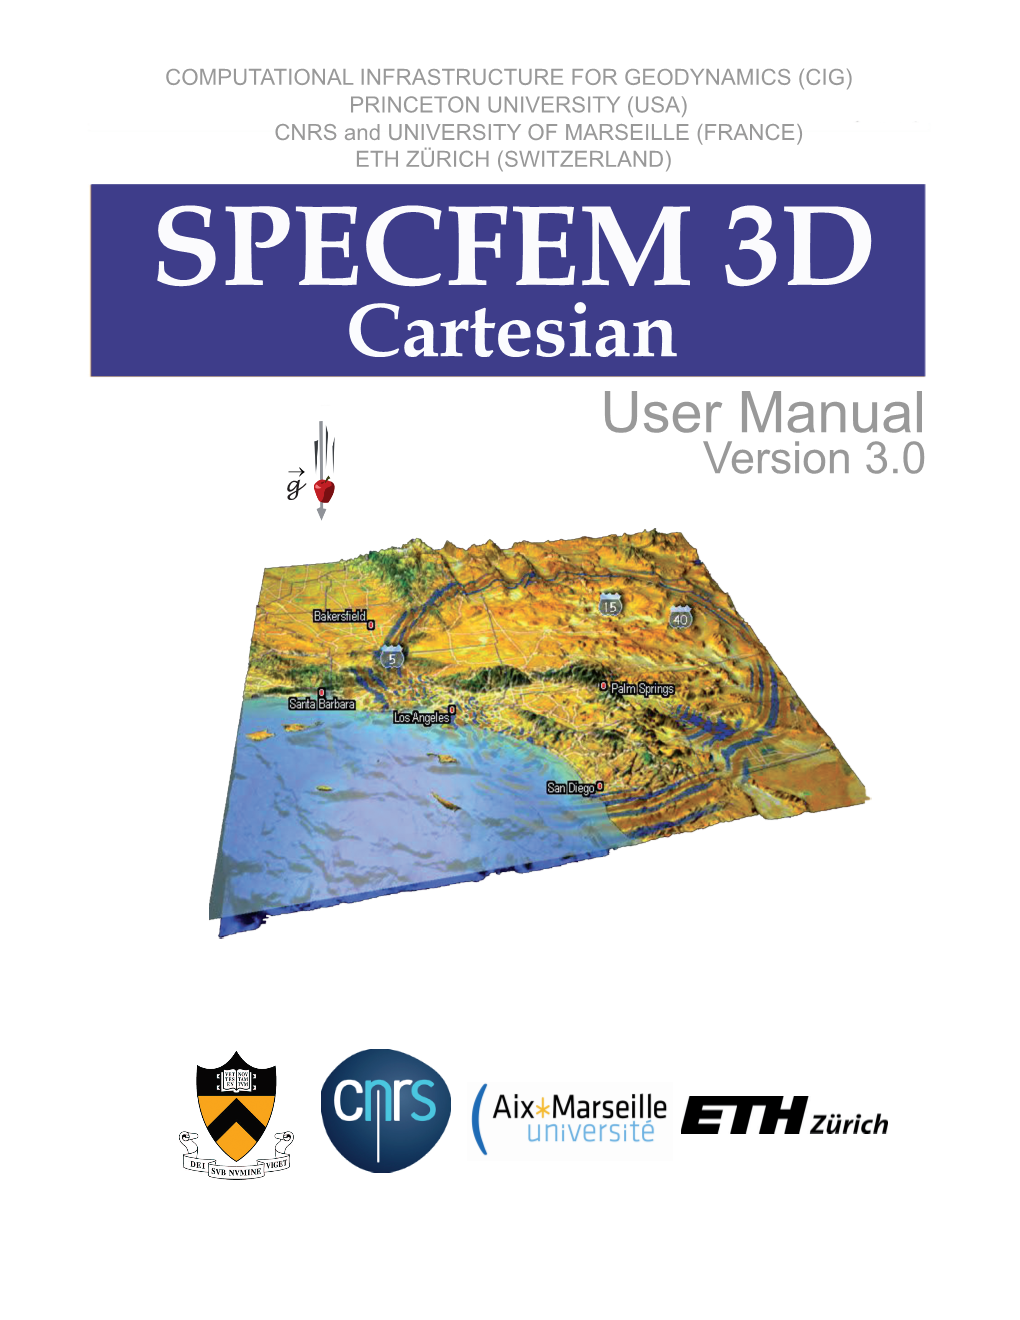 SPECFEM3D Cartesian User Manual